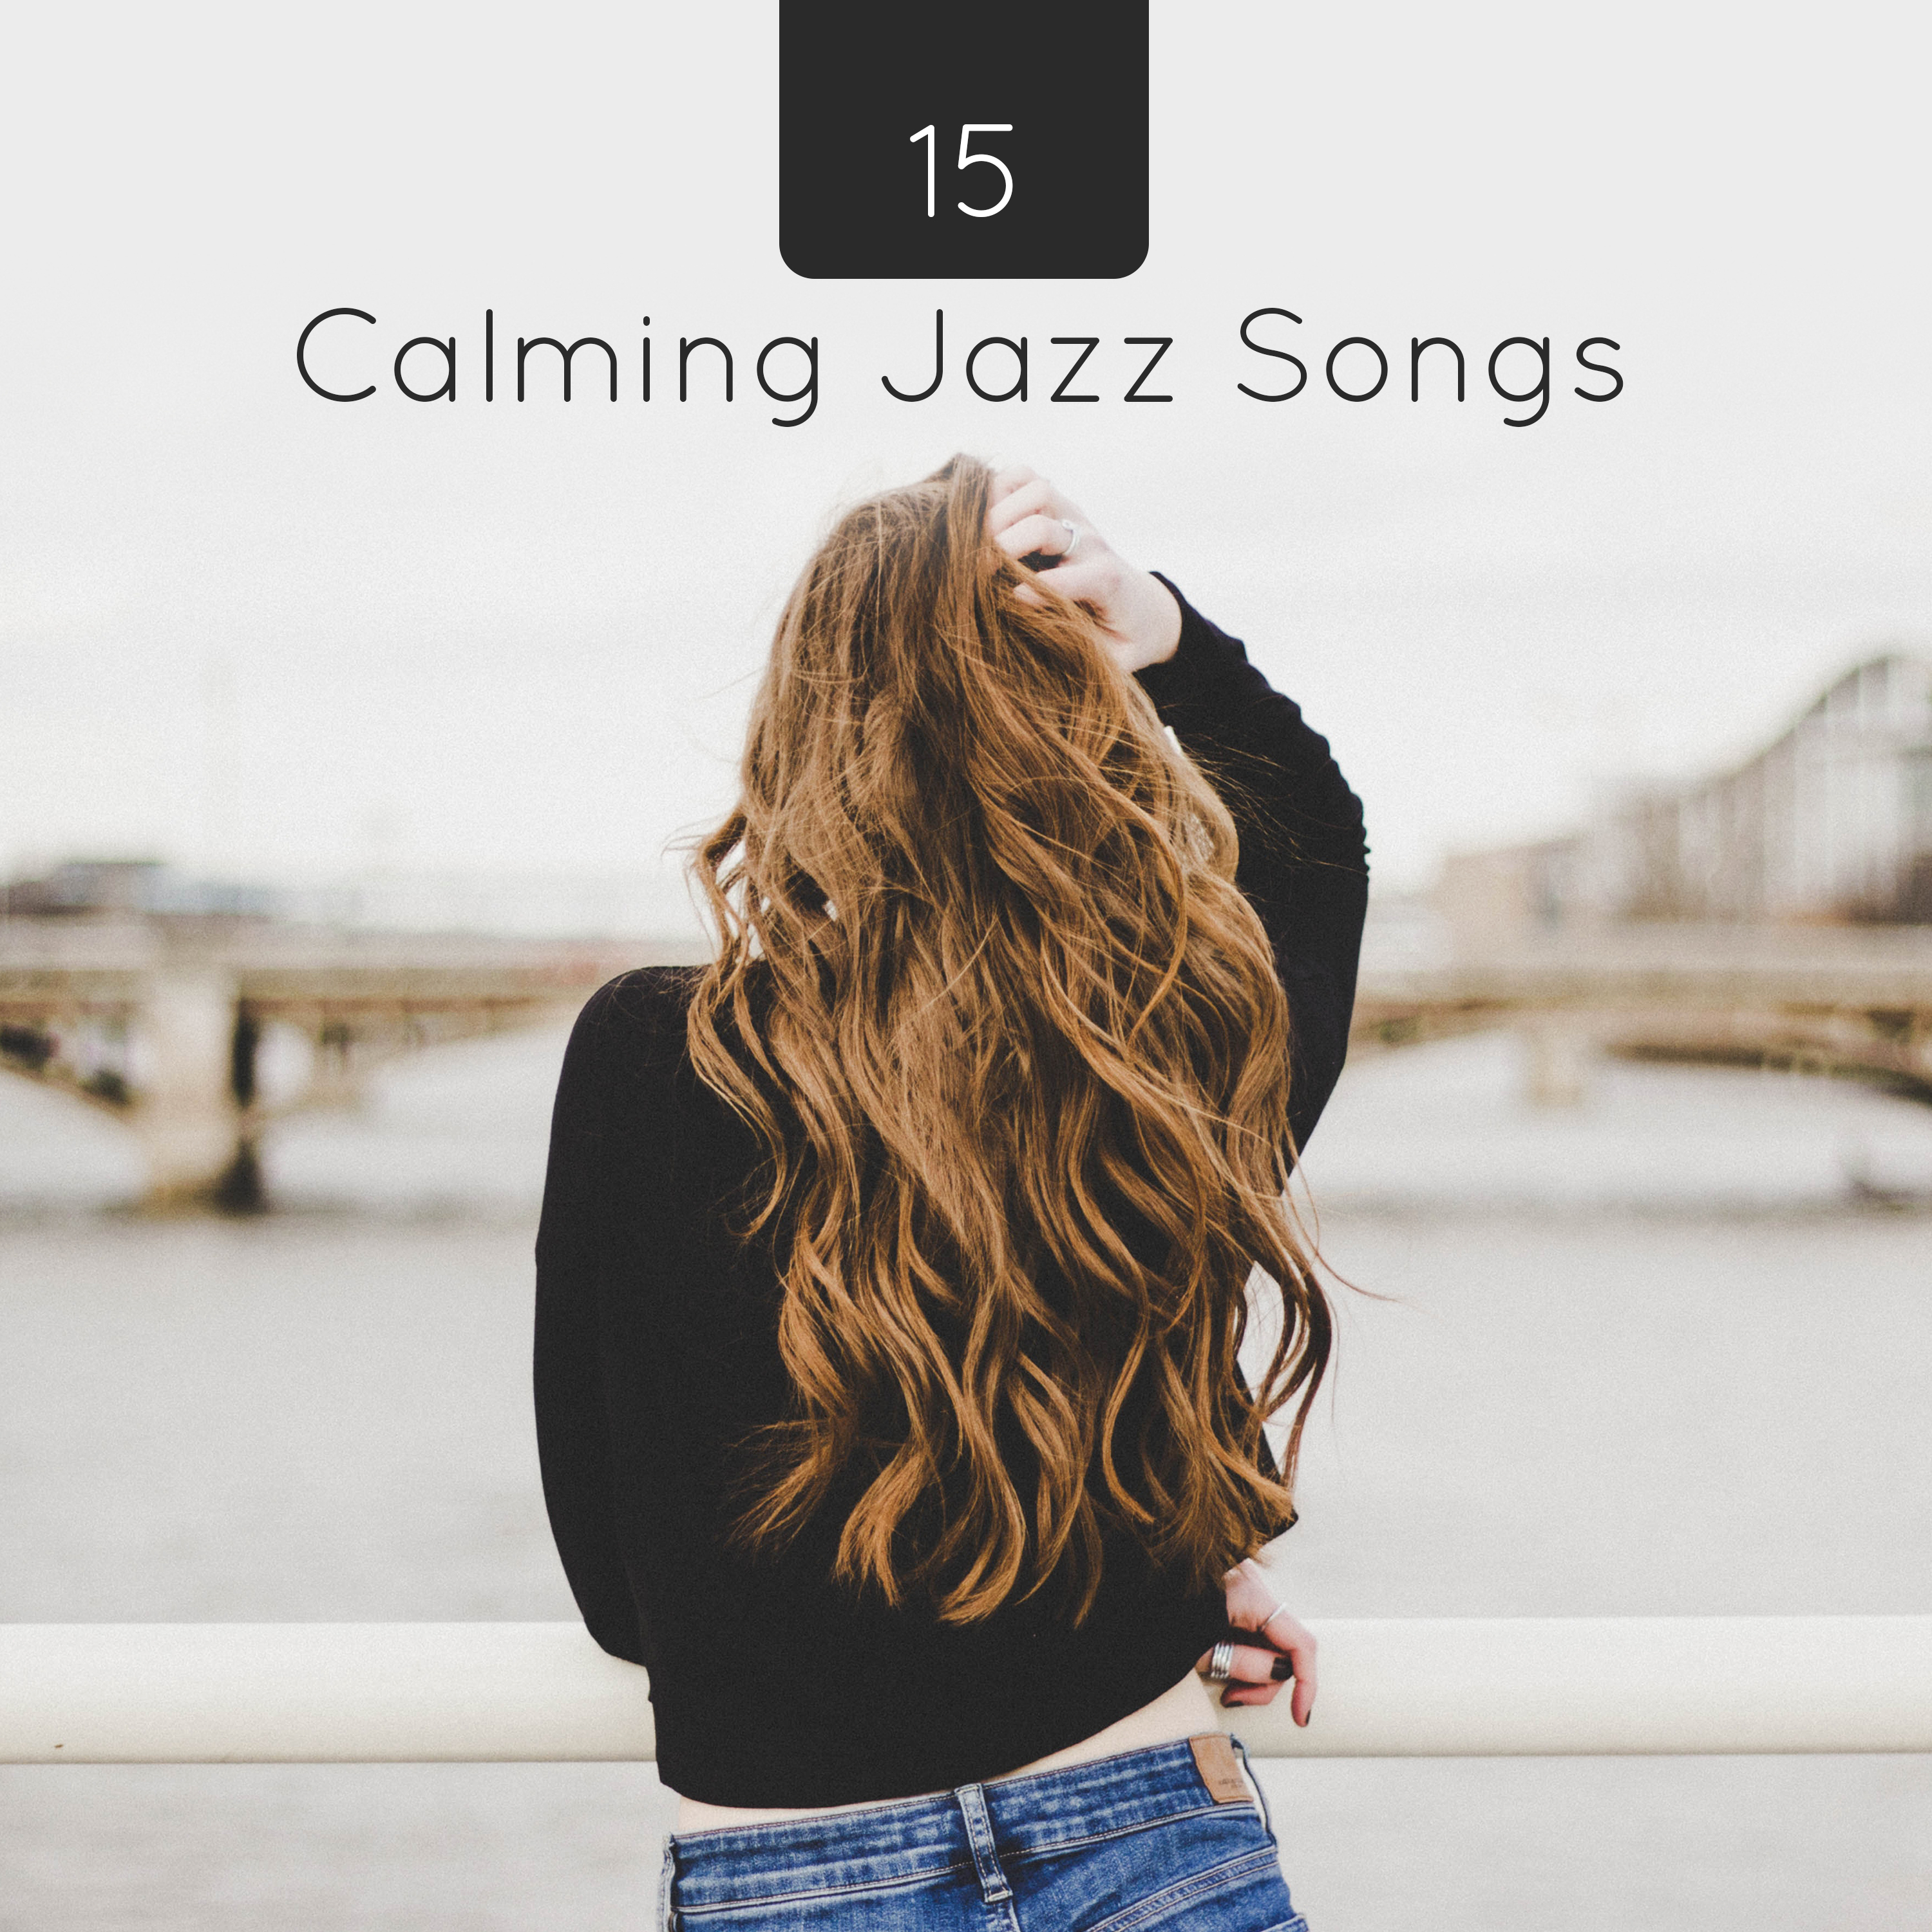 15 Calming Jazz Songs